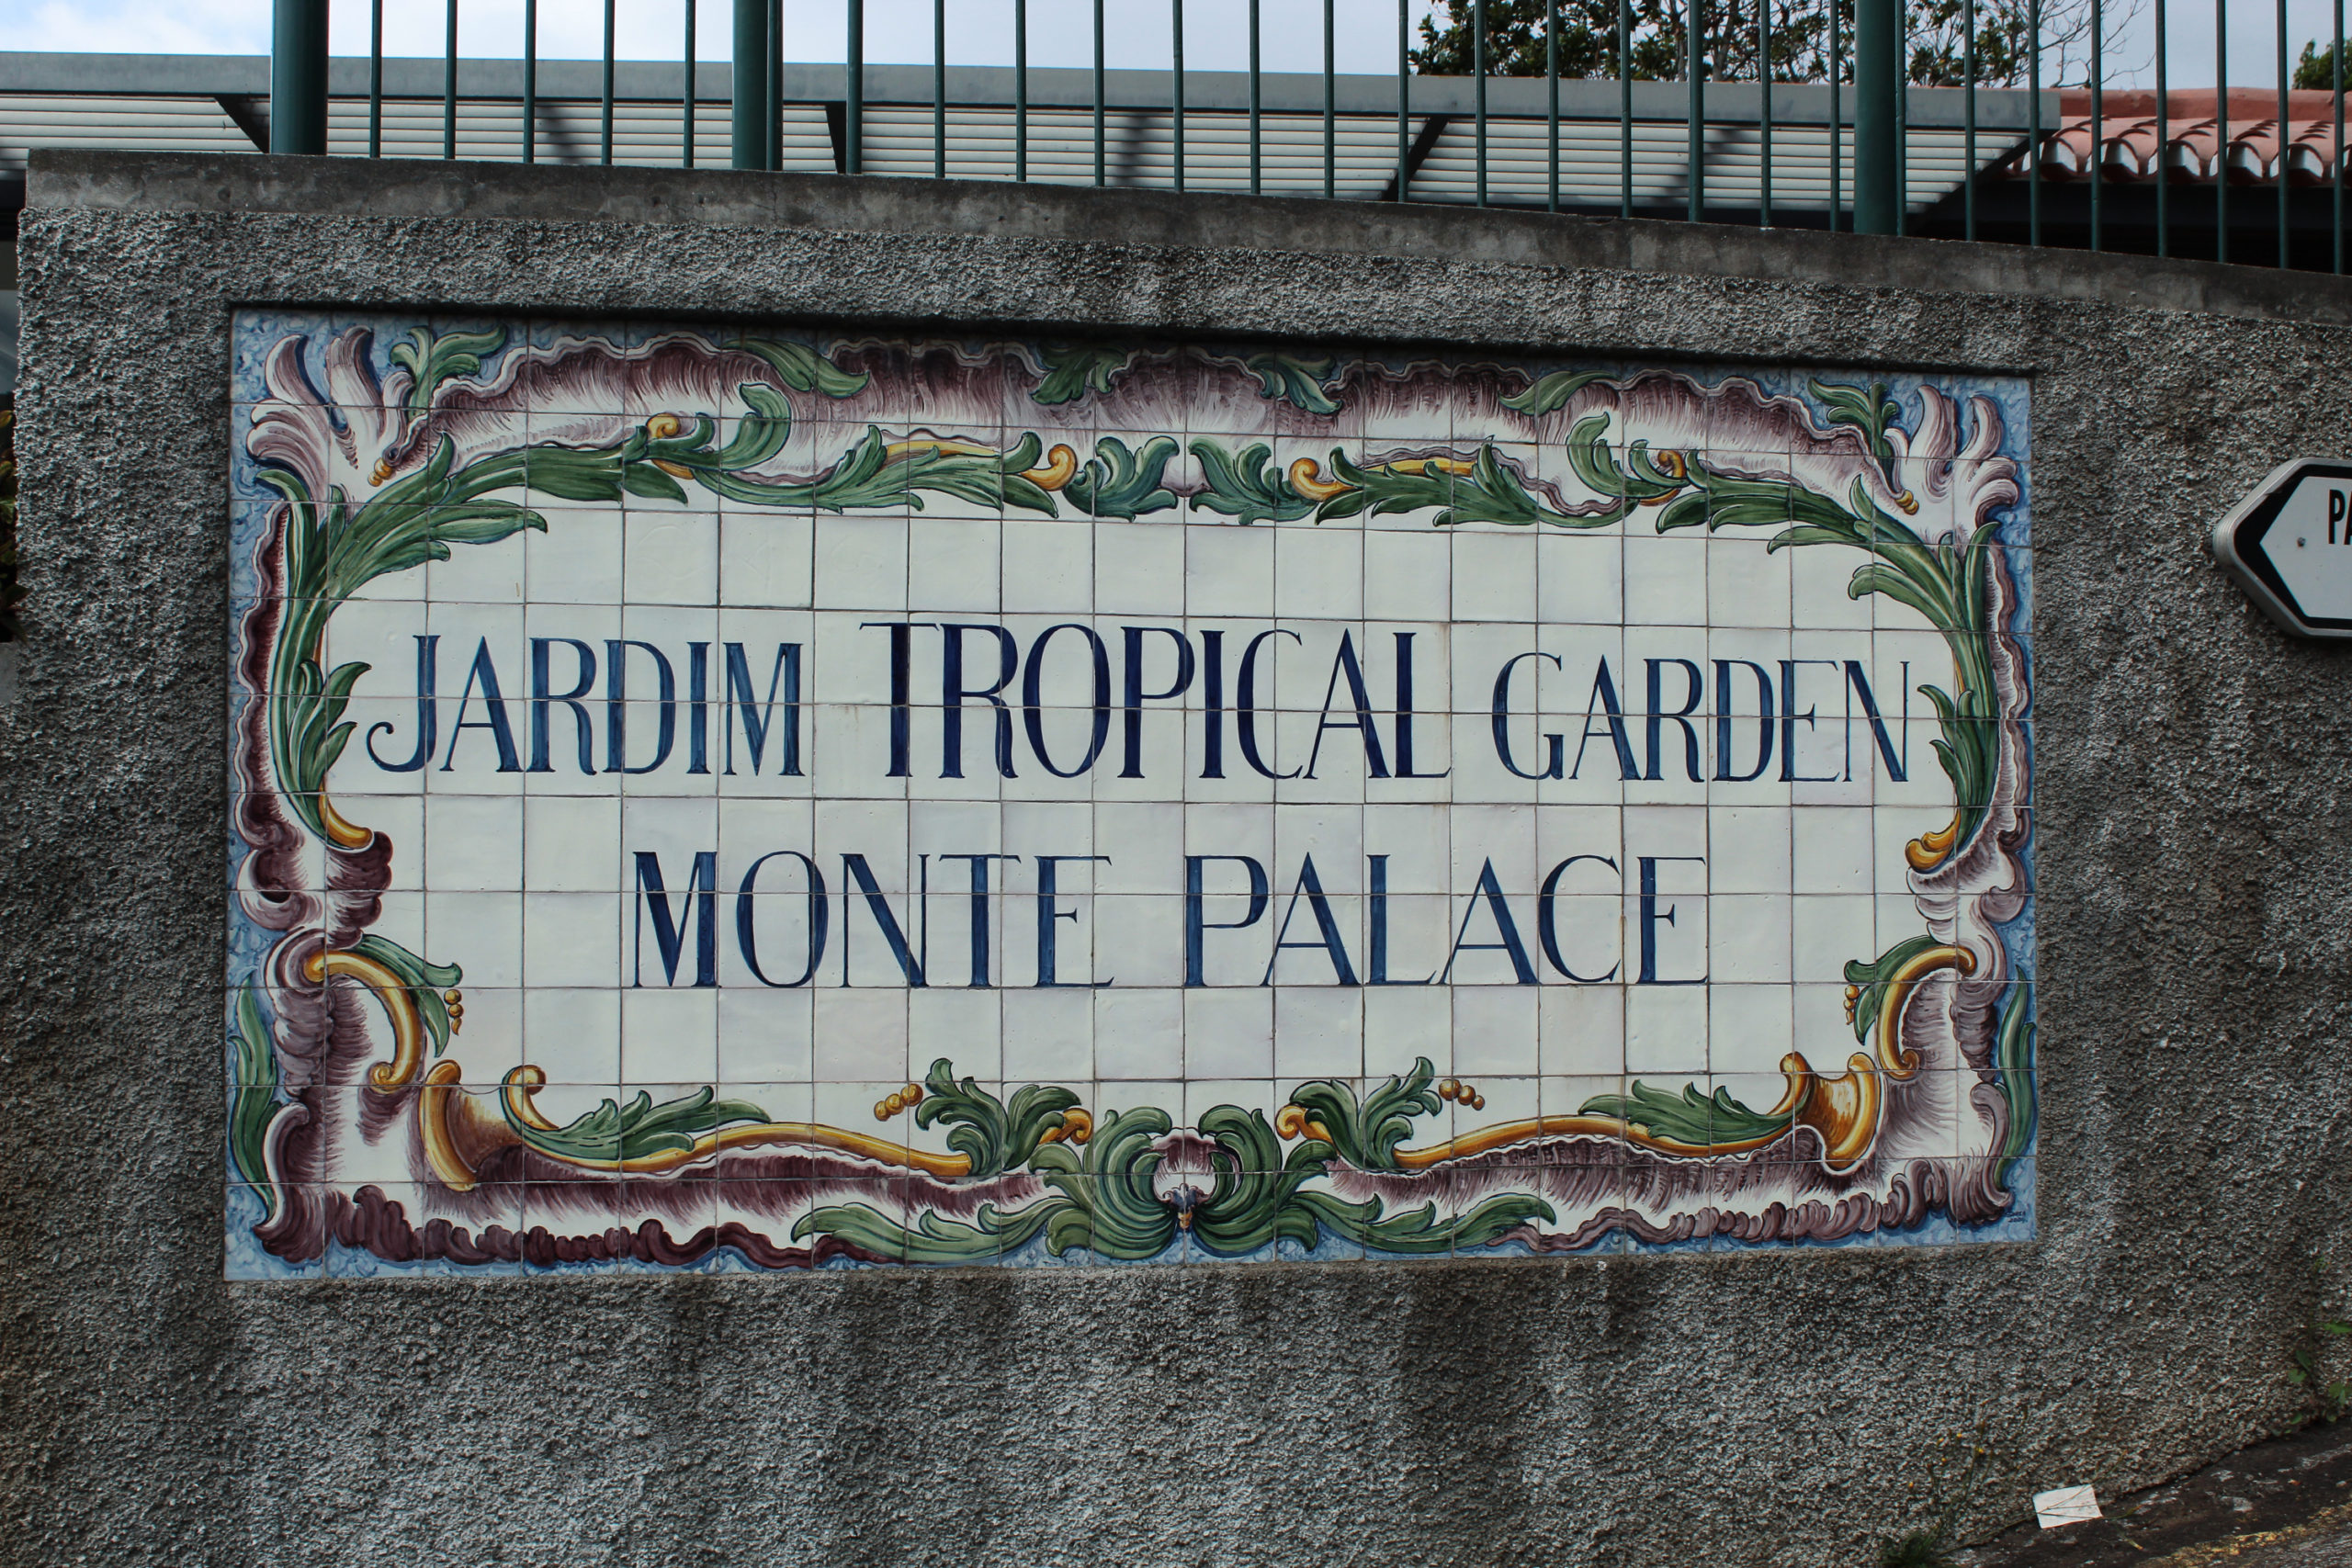 madera jardim tropical garden monta palace